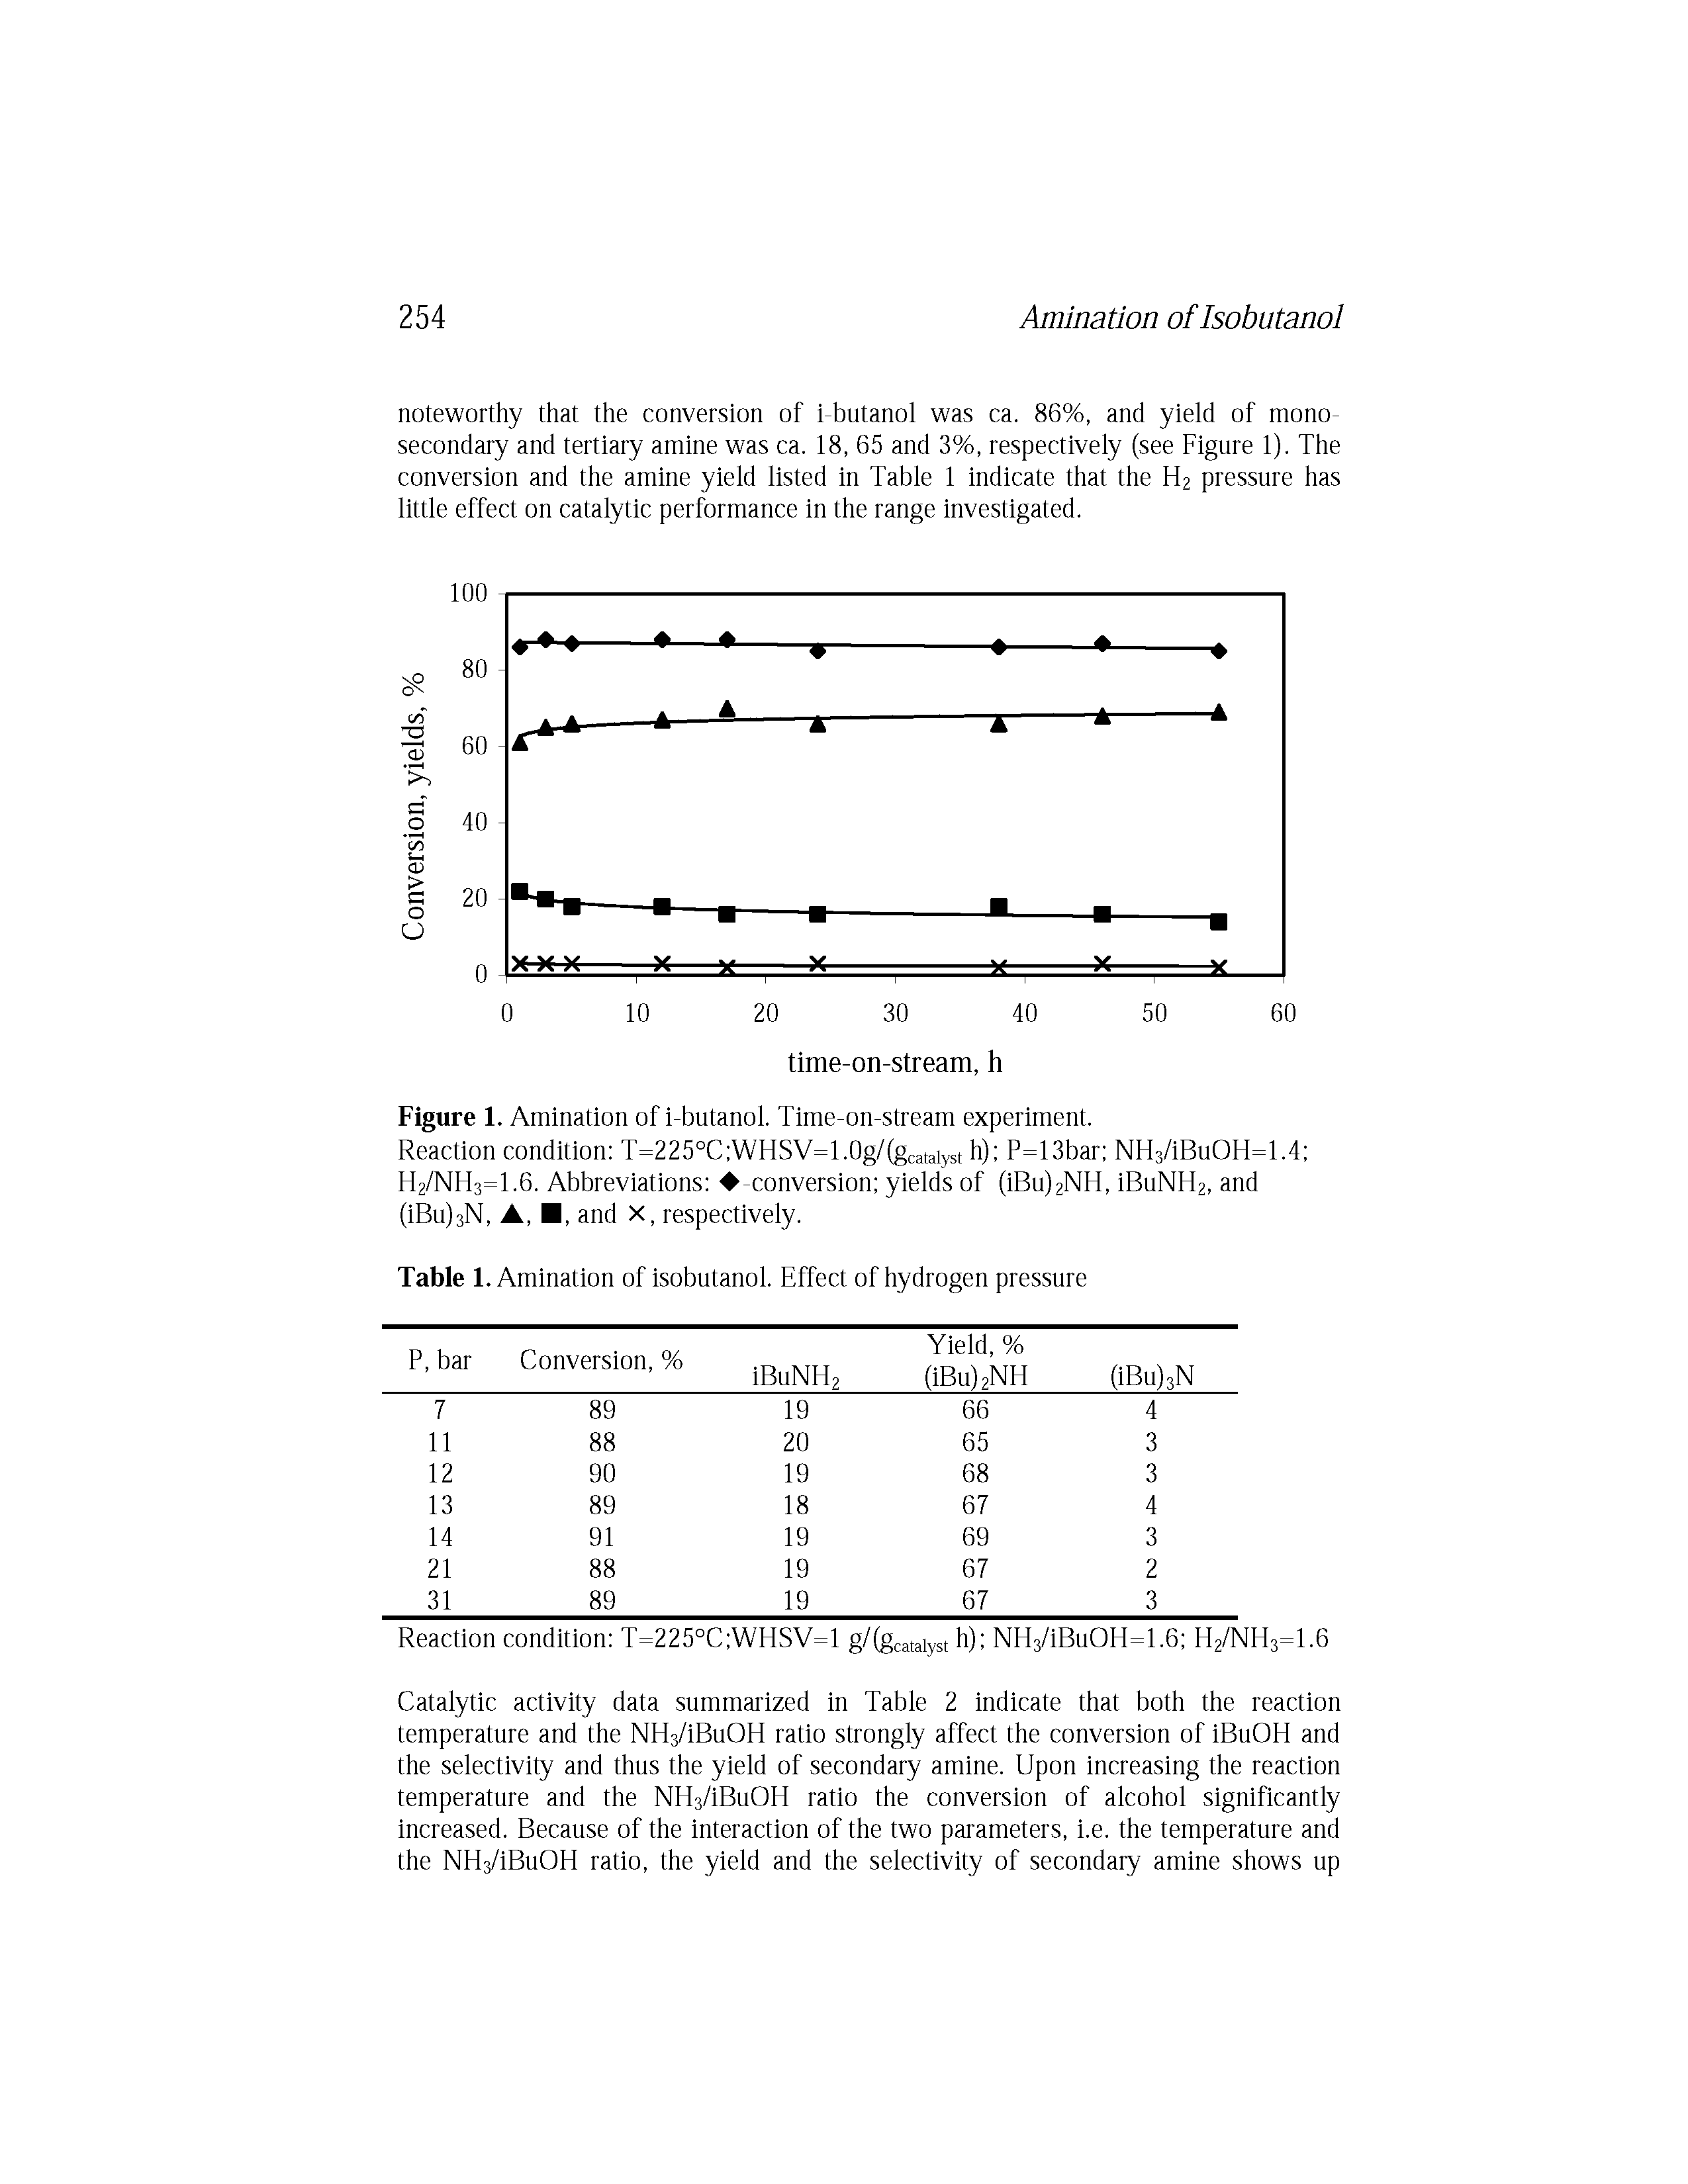 Figure 1. Amination of i-butanol. Time-on-stream experiment.